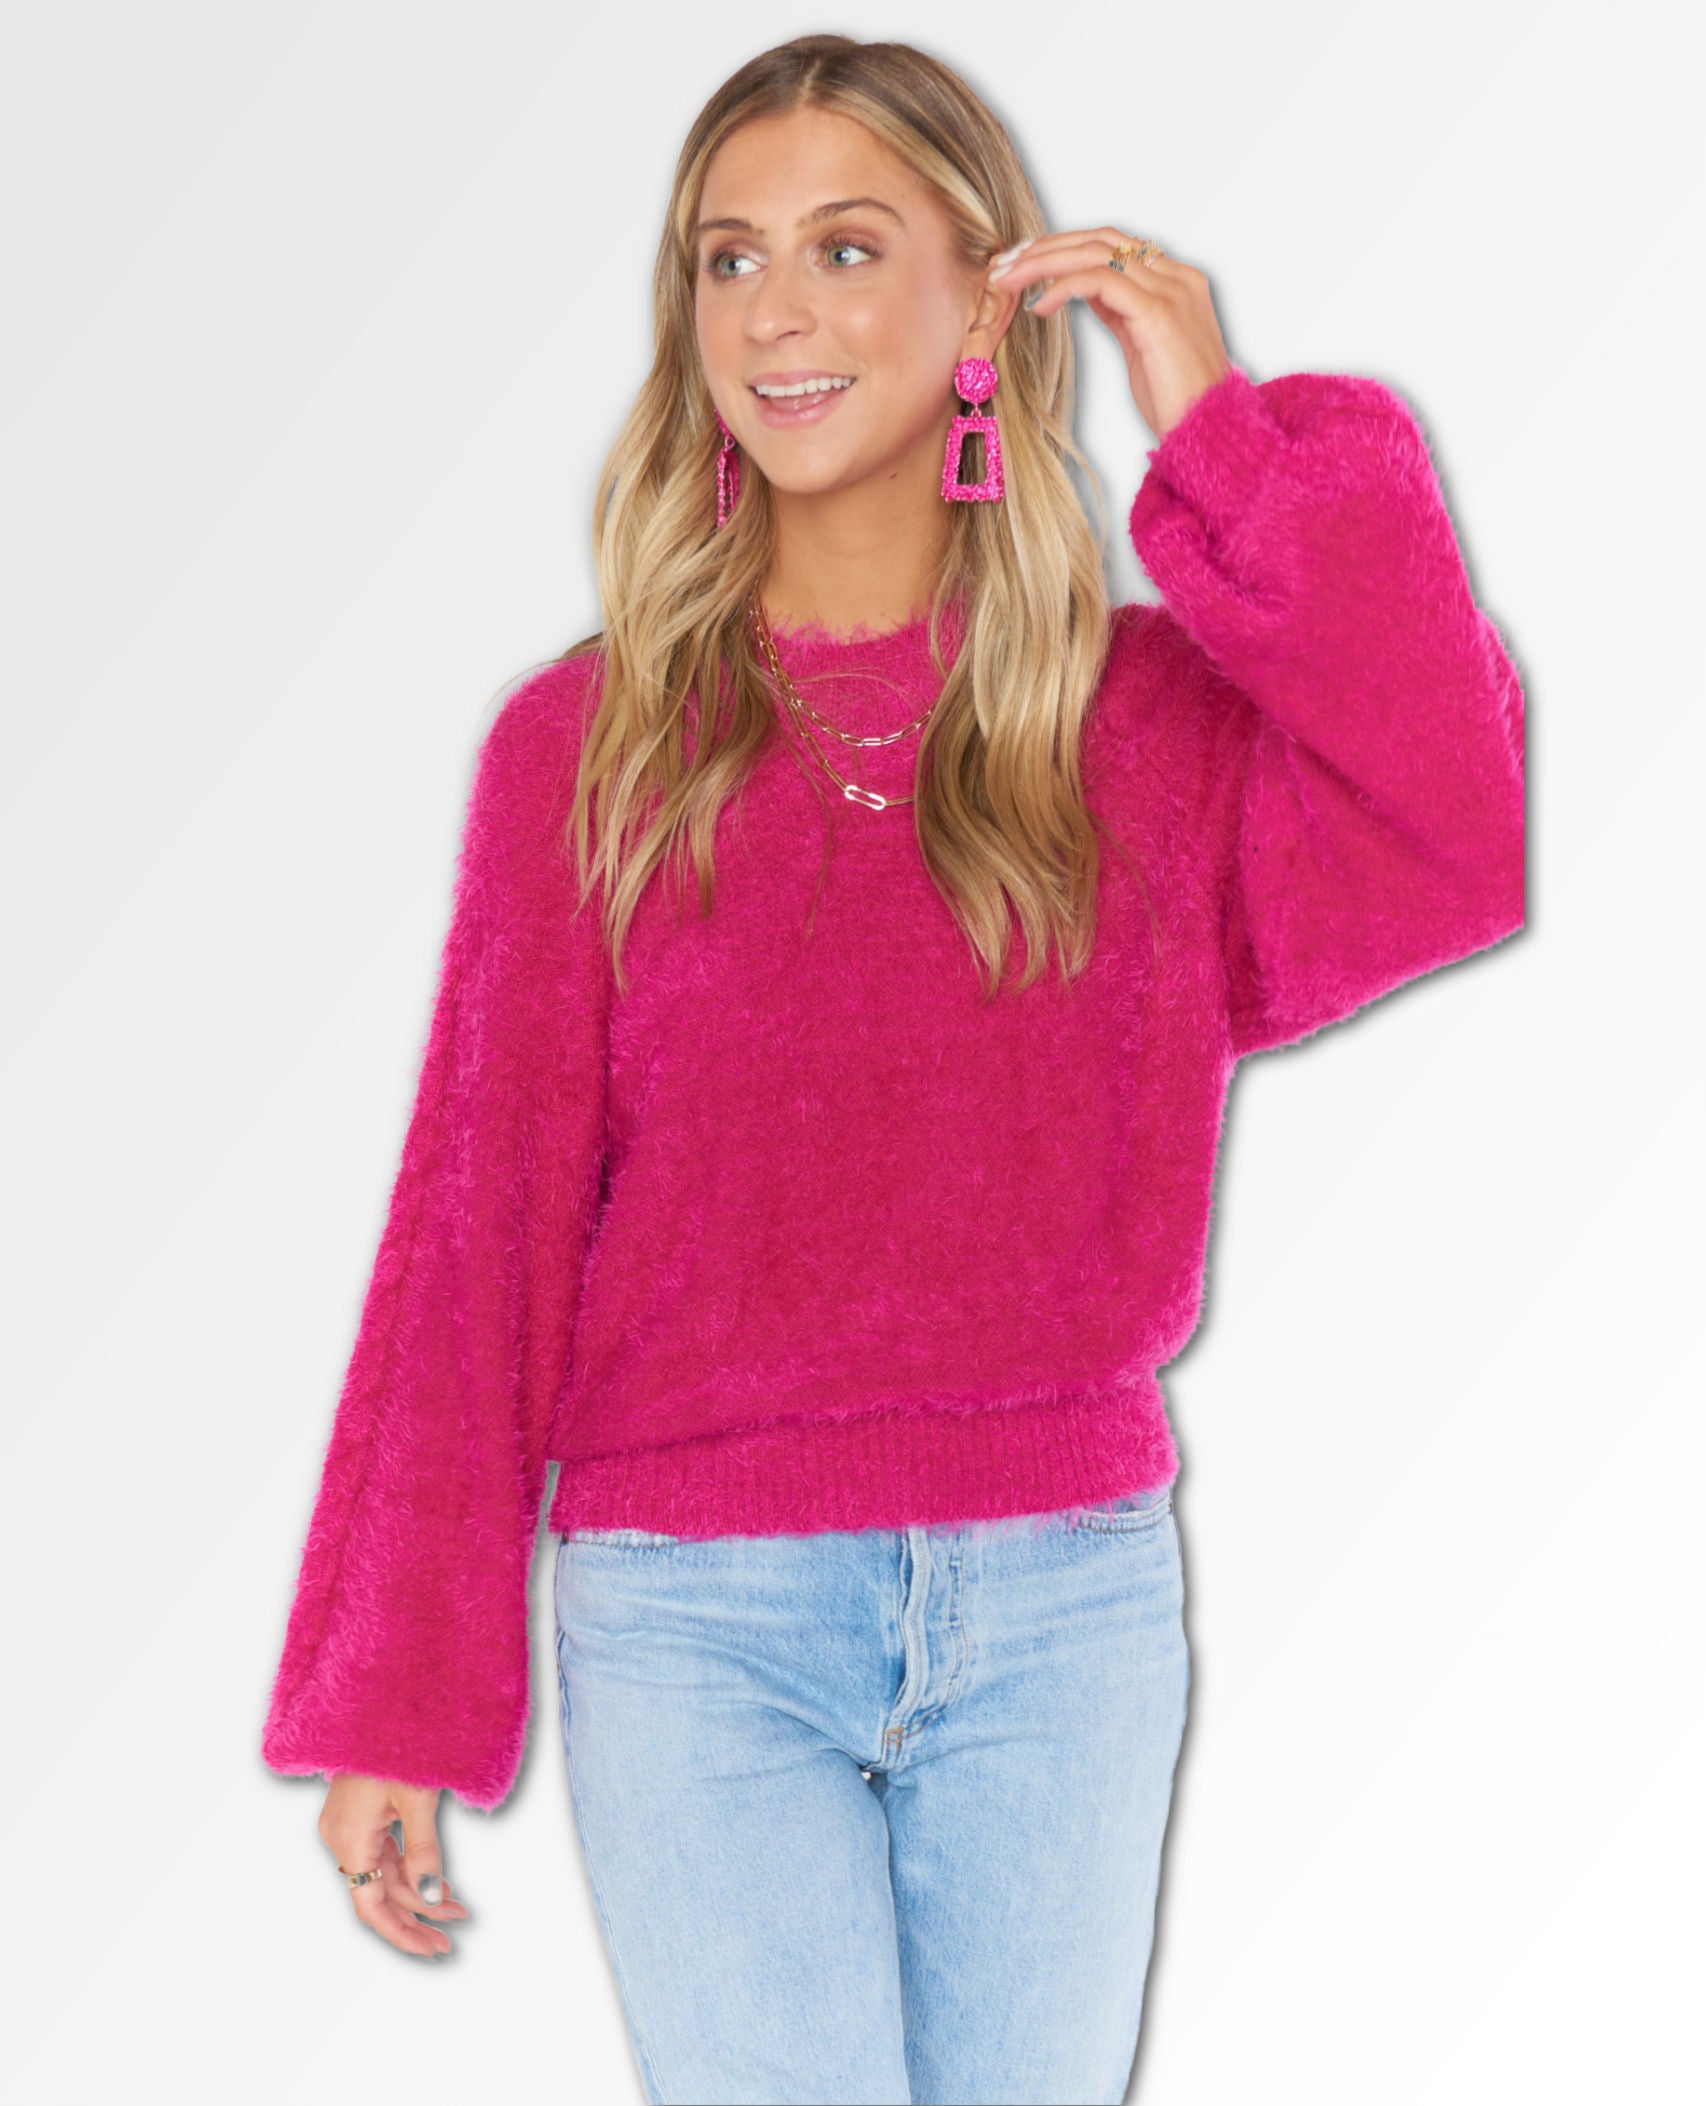 Vienna Hot Pink Knit Sweater